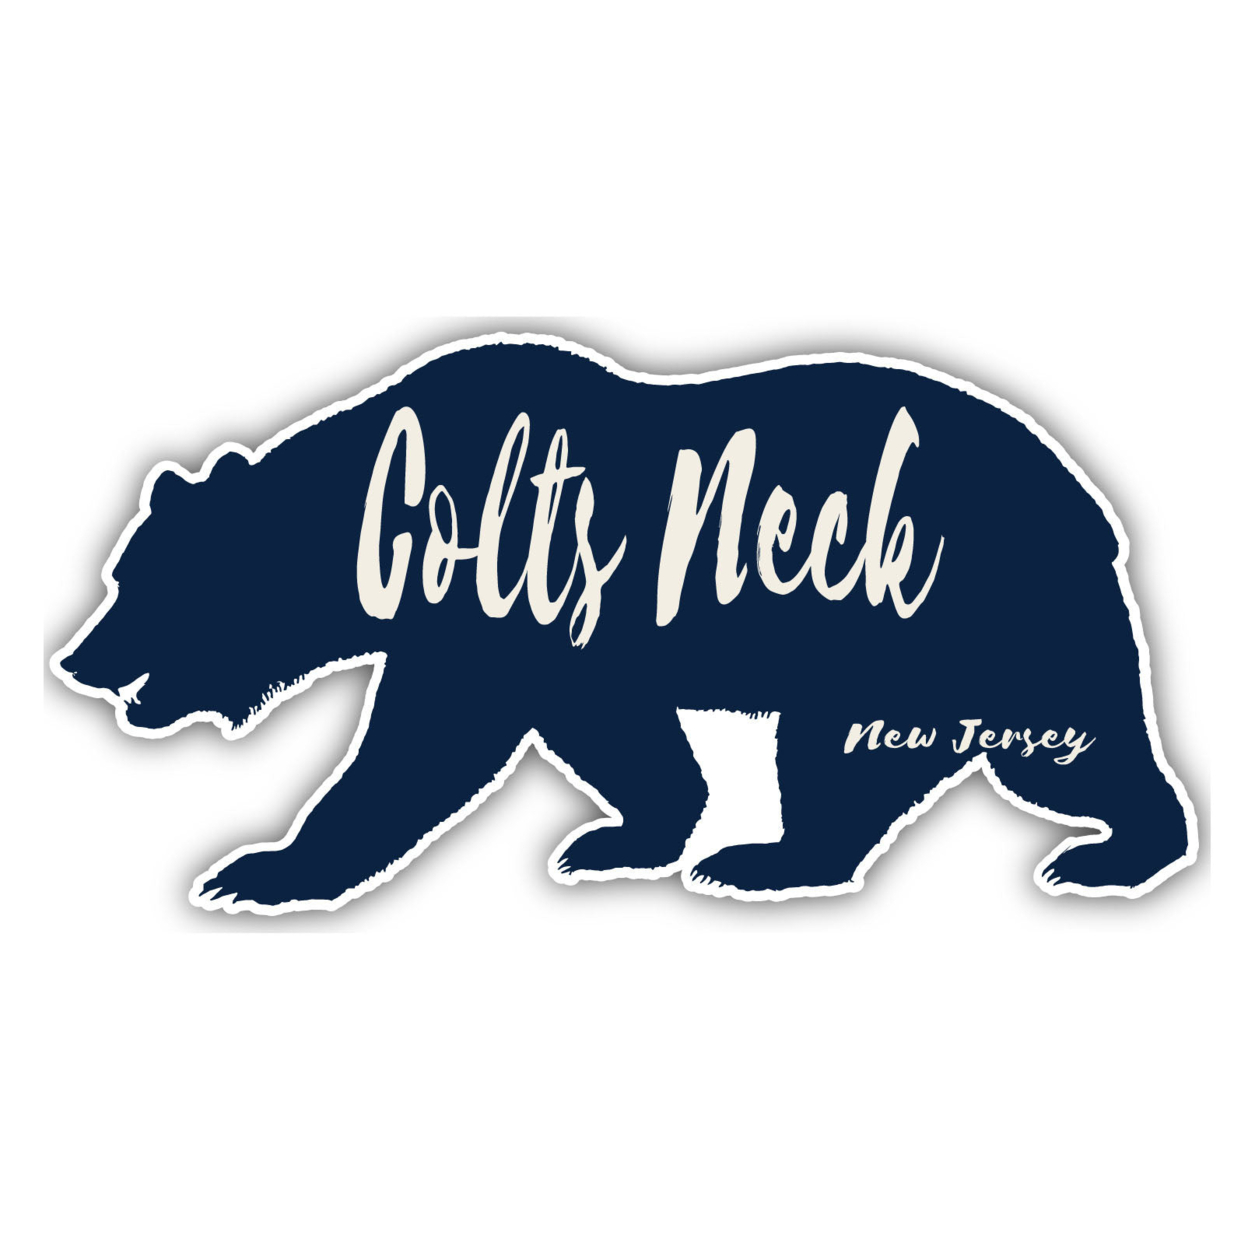 Colts Neck New Jersey Souvenir Decorative Stickers (Choose Theme And Size) - Single Unit, 2-Inch, Bear